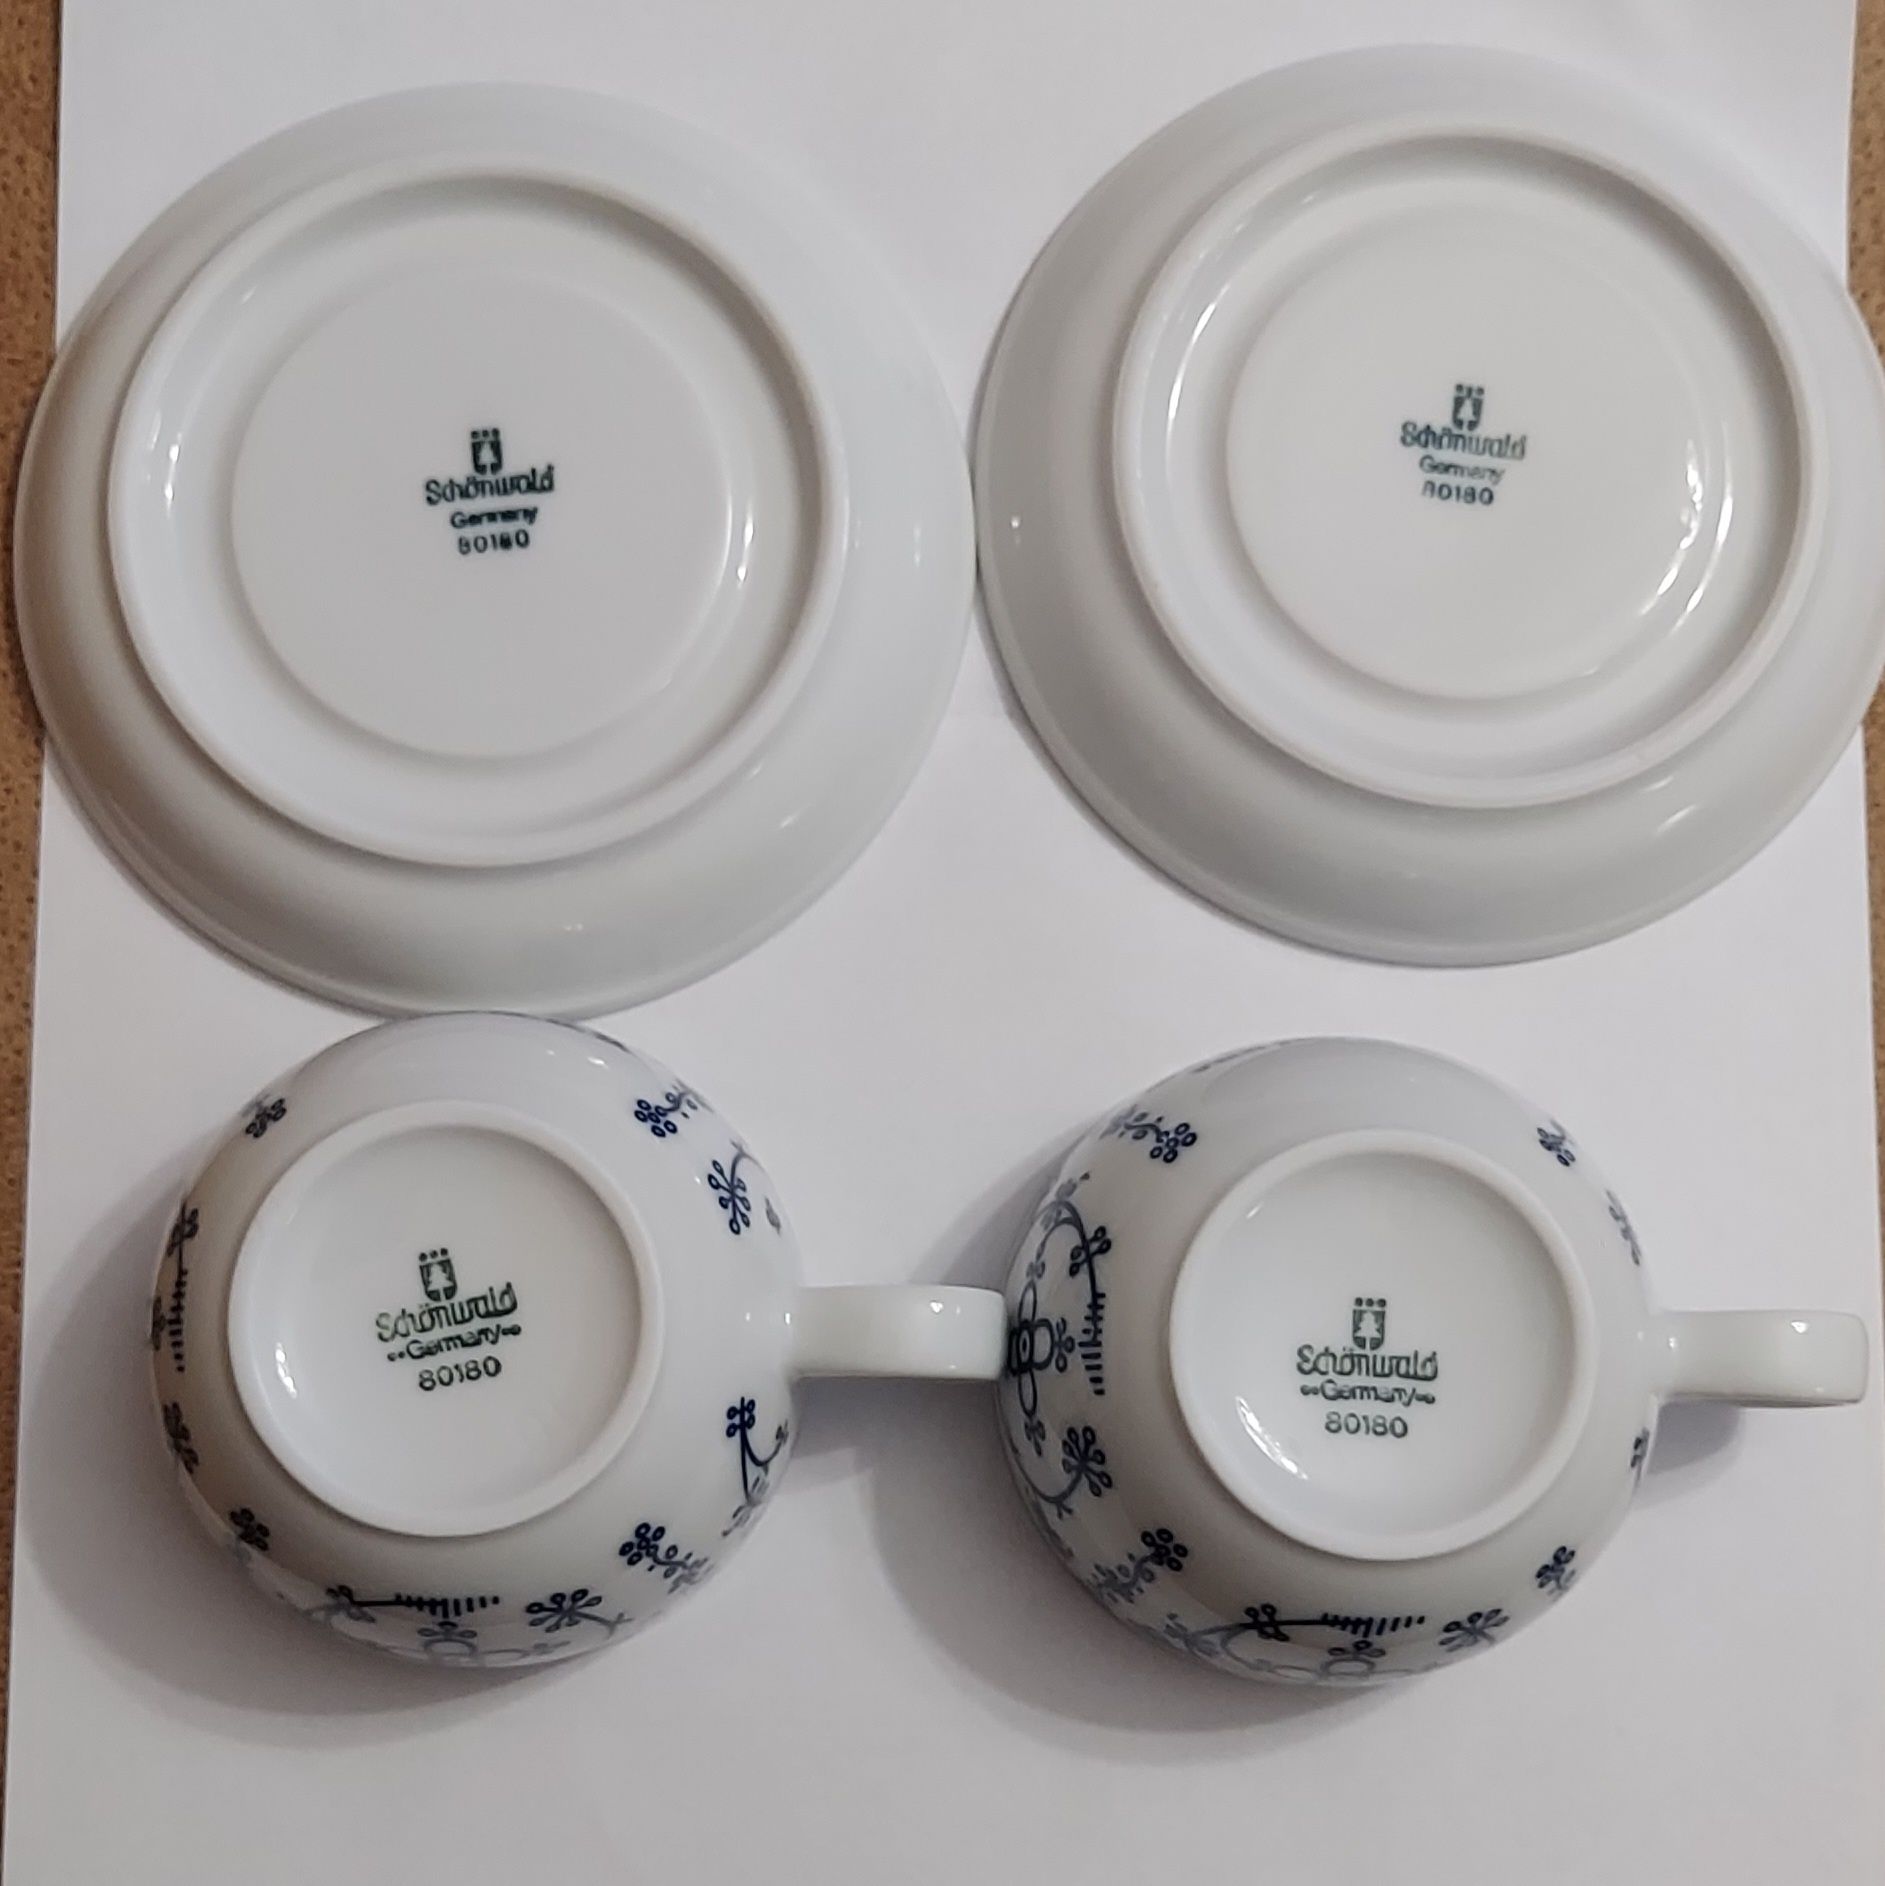 2 komplety fryzyjskich filiżanek i spodków  porcelana Schönwald